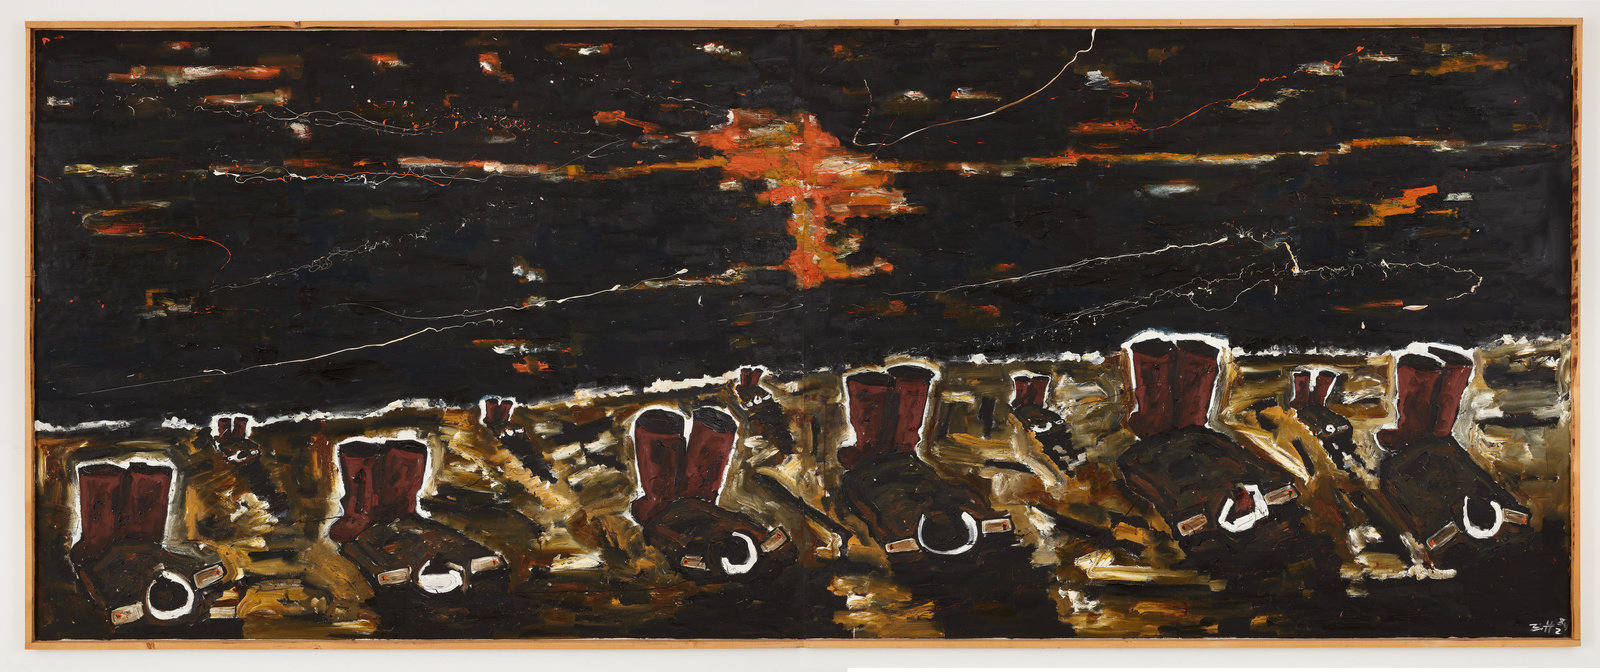 Büttner, badende russen (bathing russians), 1984, oil on canvas, diptych, 75 x 189 in., 190 x 480 cm